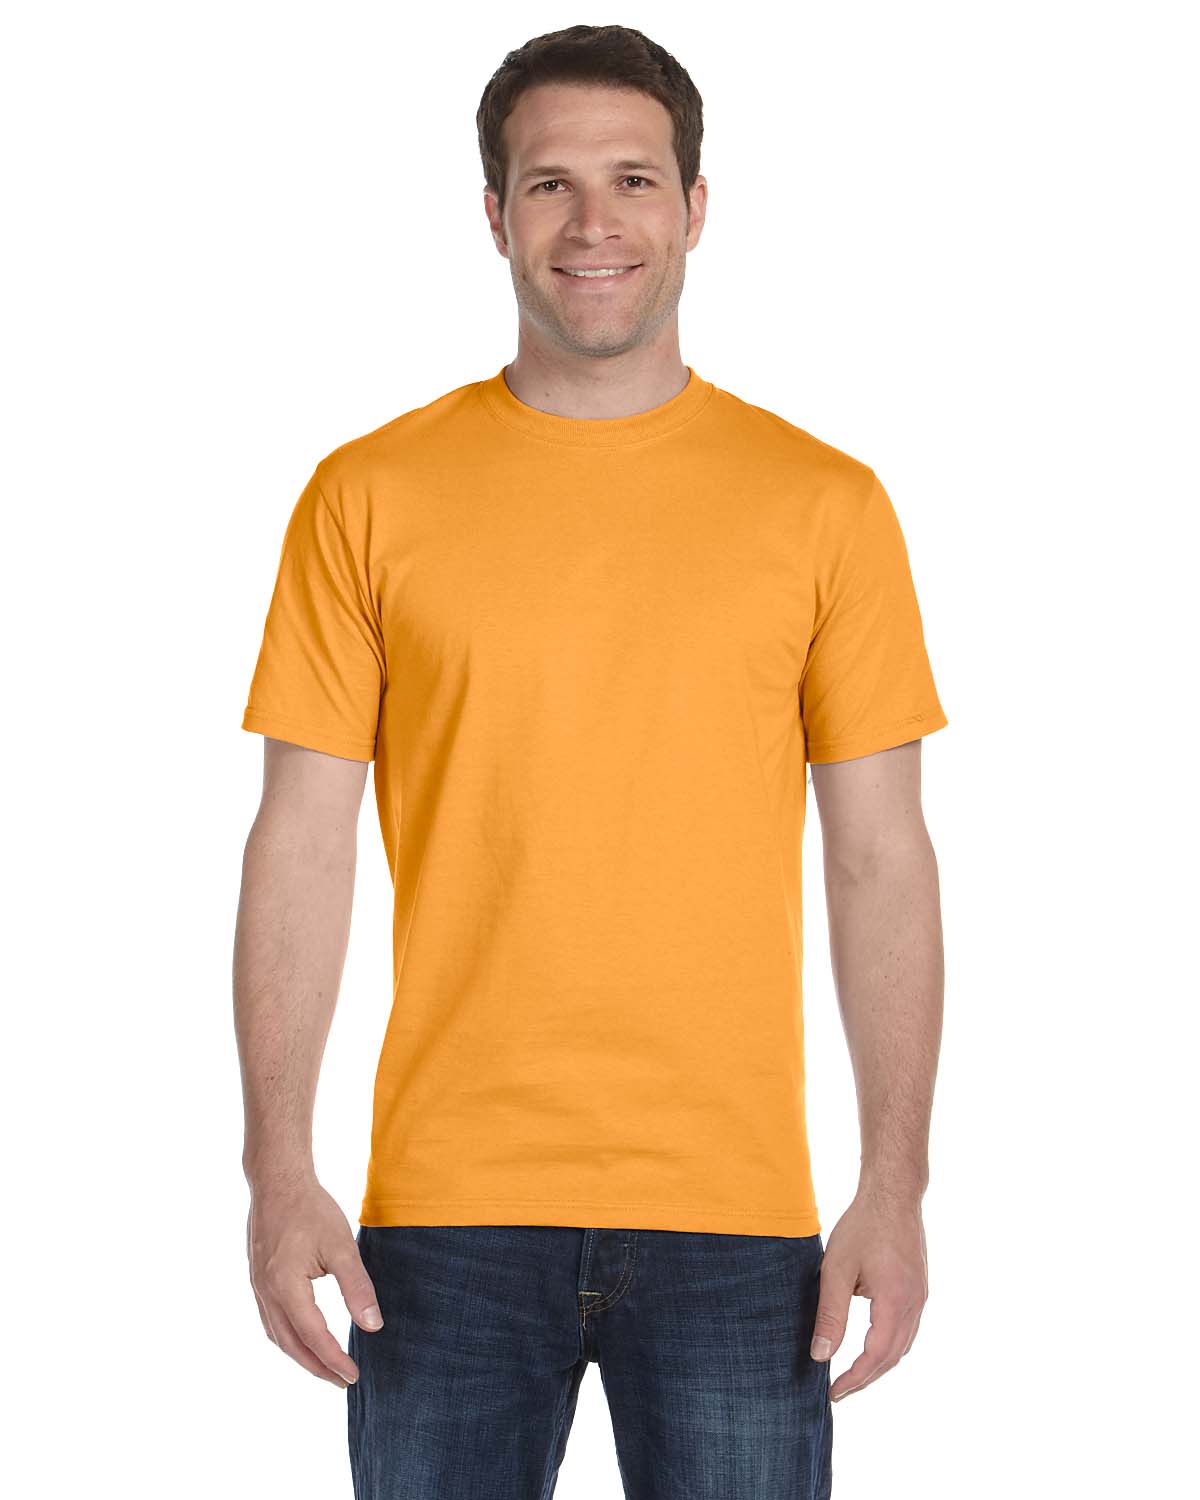 Hanes 5.2 Oz. Comfortsoft&reg; Cotton T-shirt